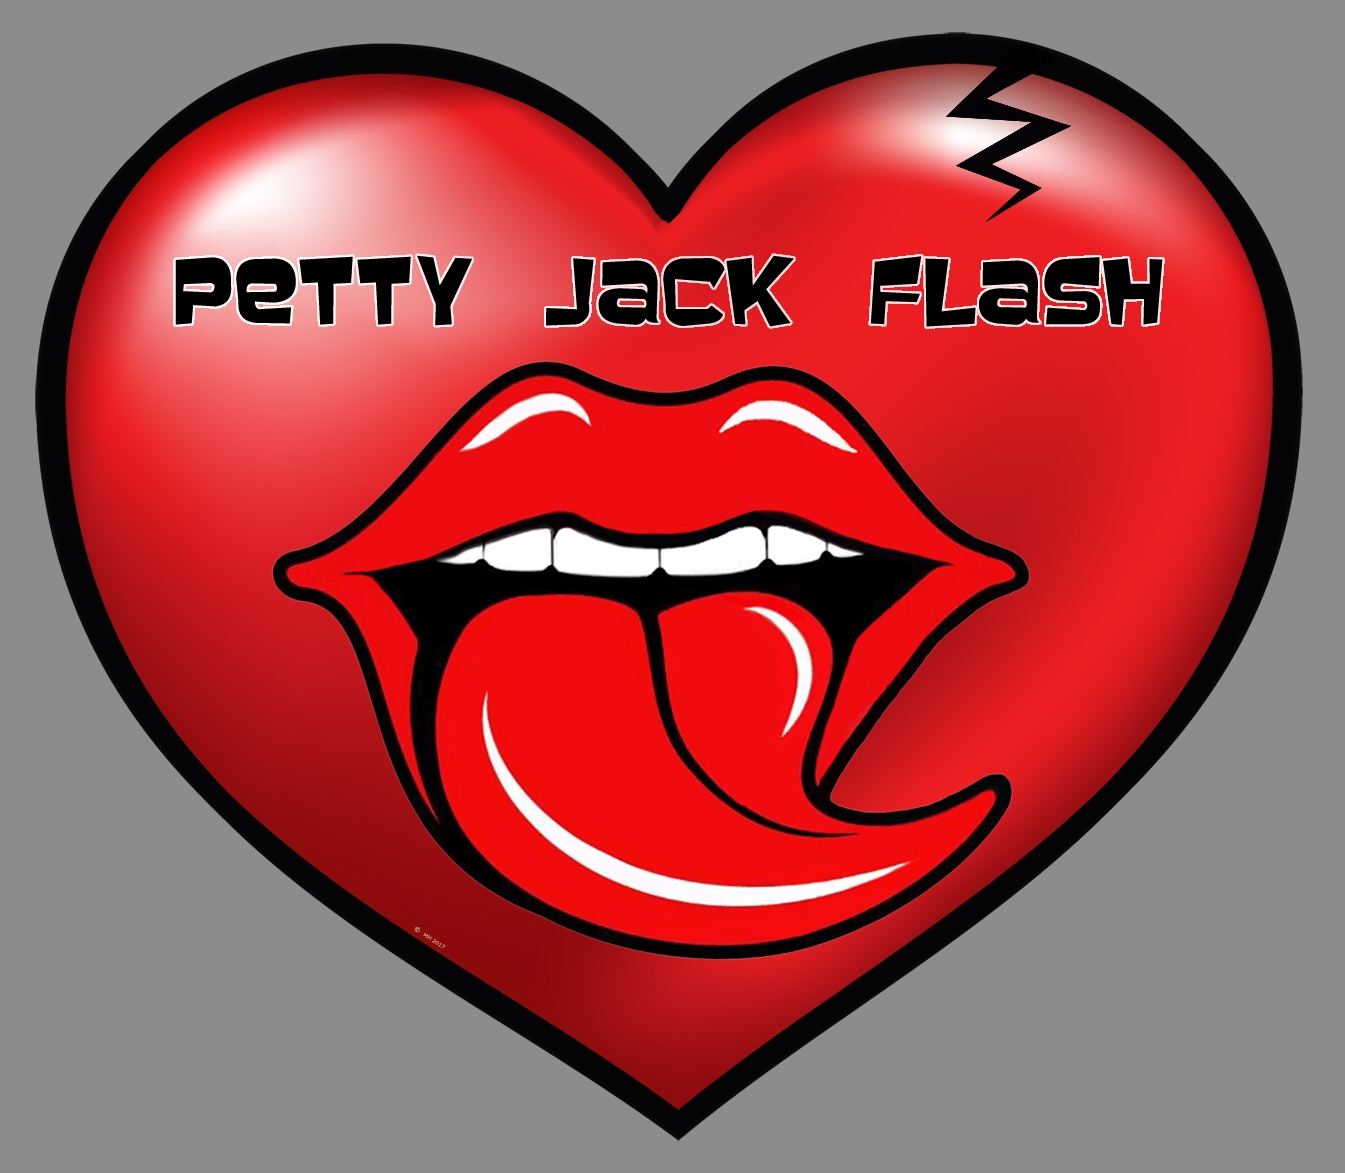 Petty Jack Flash logo